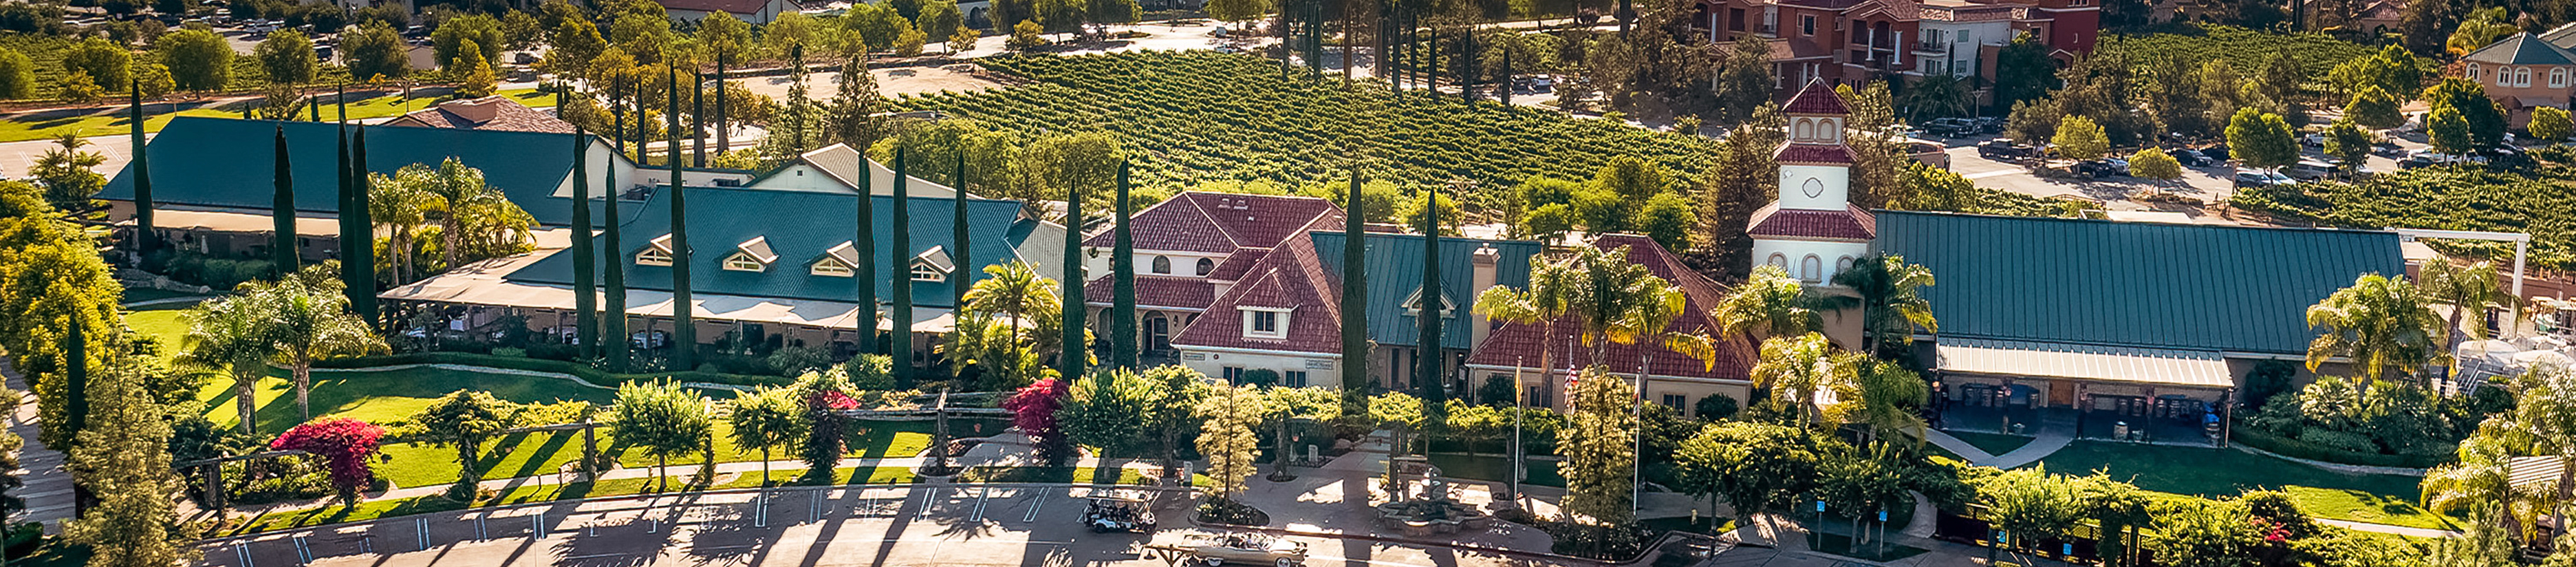 South Coast Winery Resort & Spa - Temecula CA